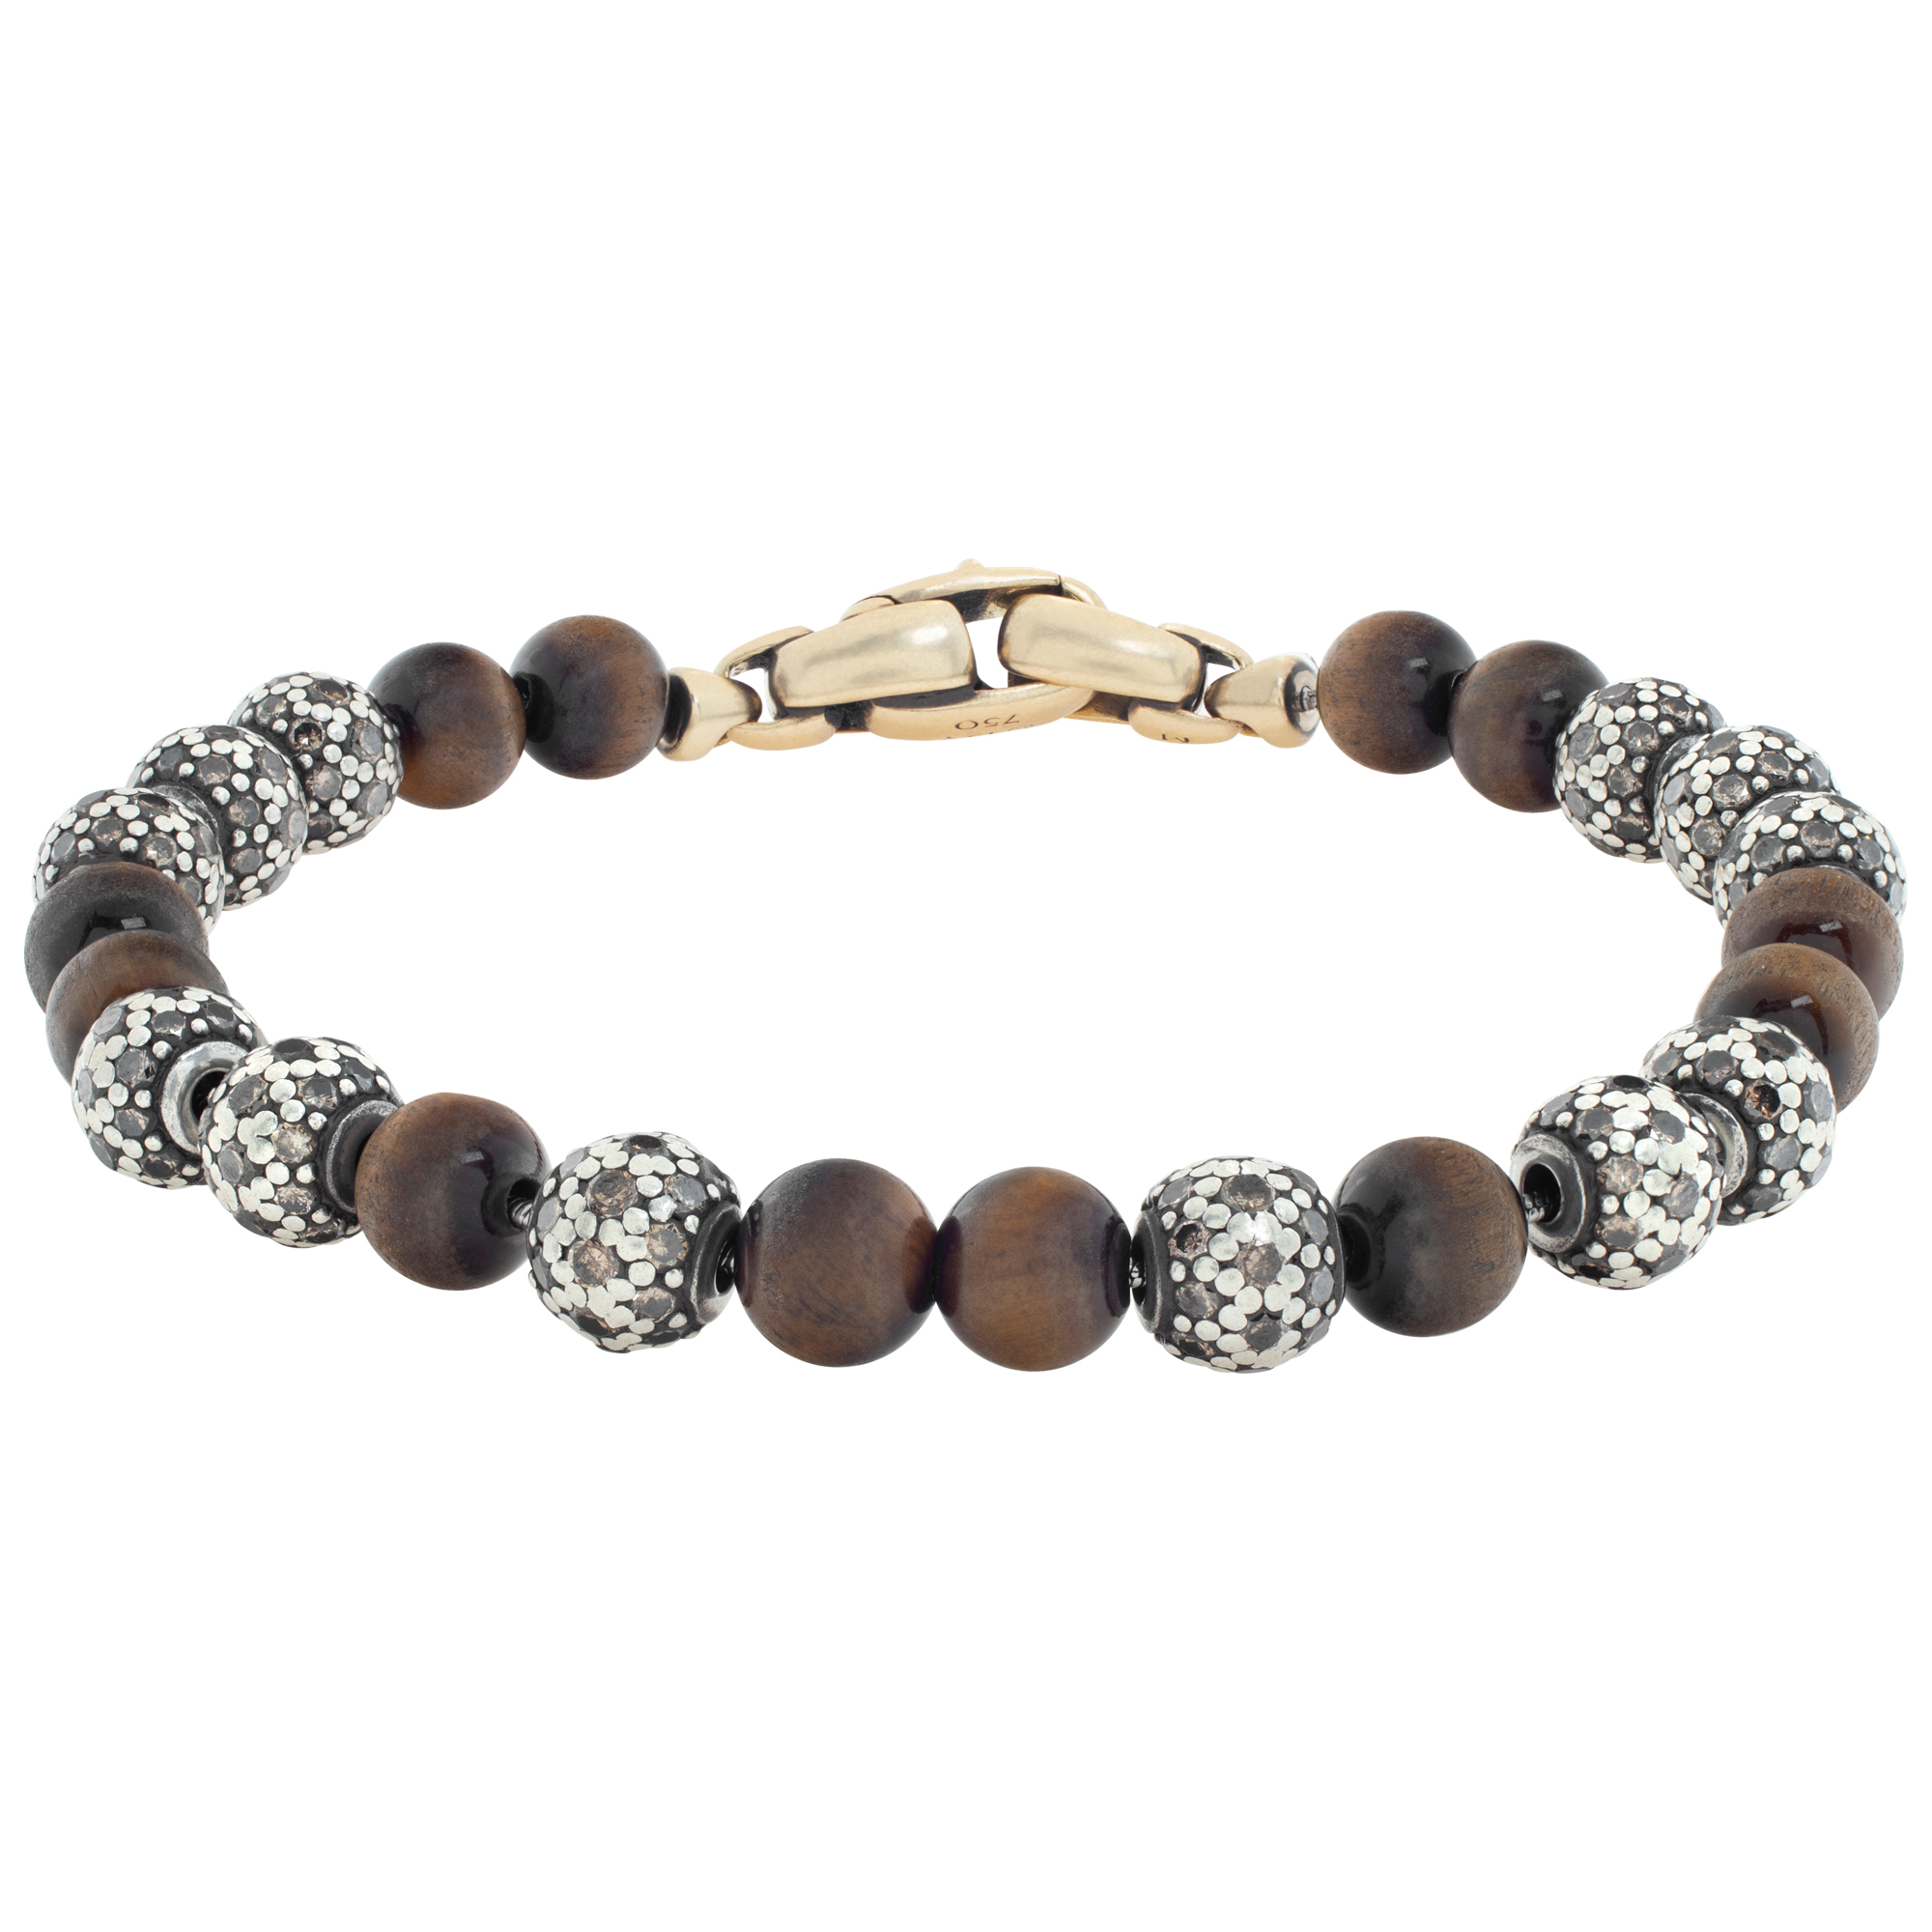 David Yurman Spiritual Bead bracelet with Tigers Eye and approx. 6.82 carats cognac diamonds in 18k